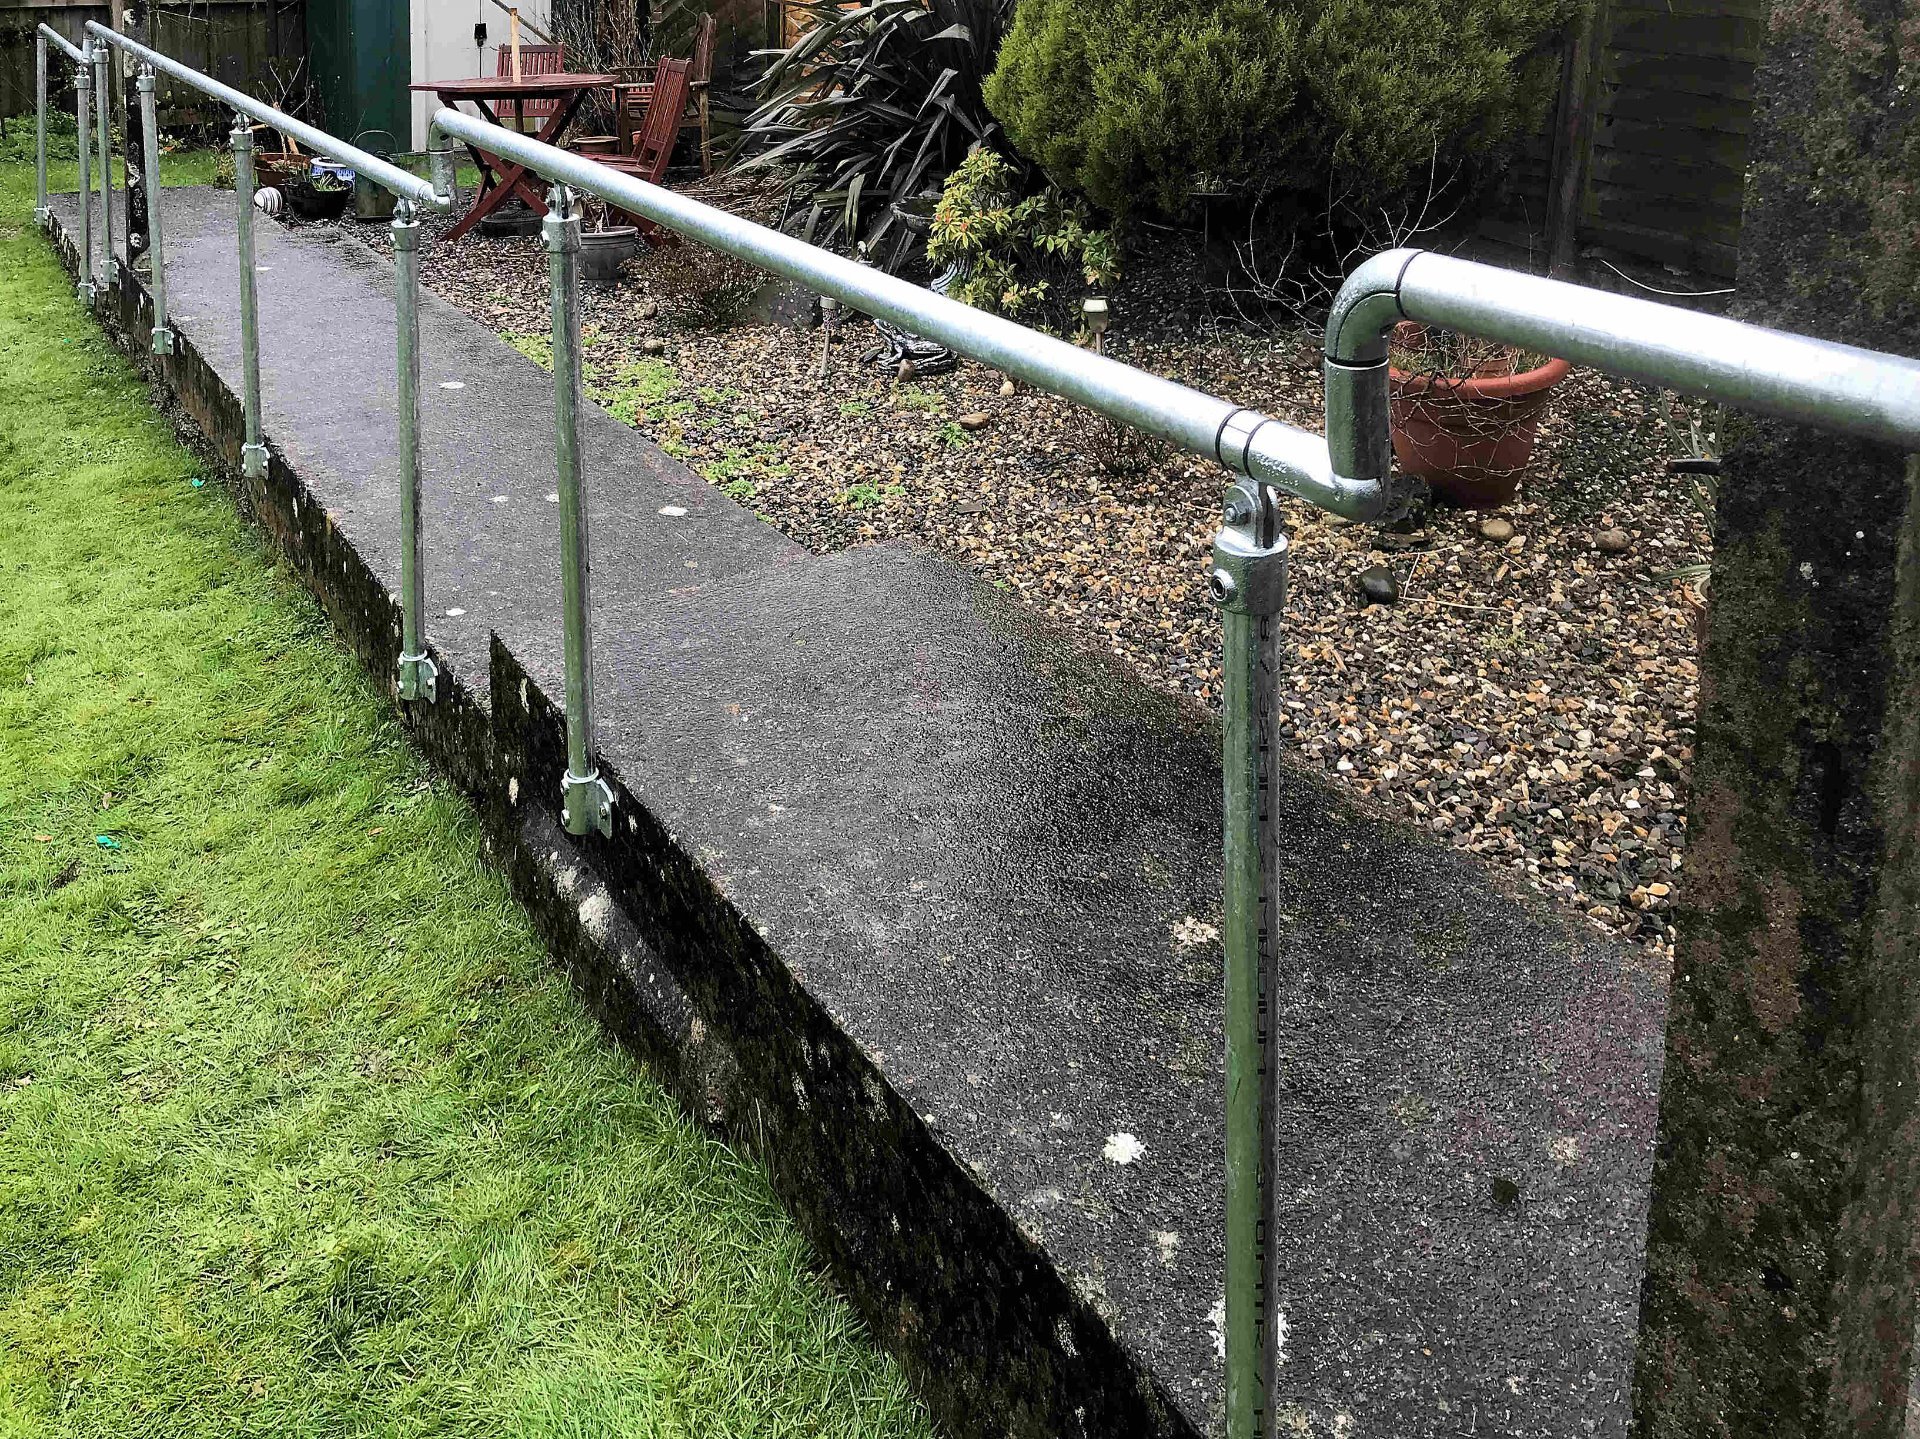 Keyclamp handrail installation for rear garden path in North Devon